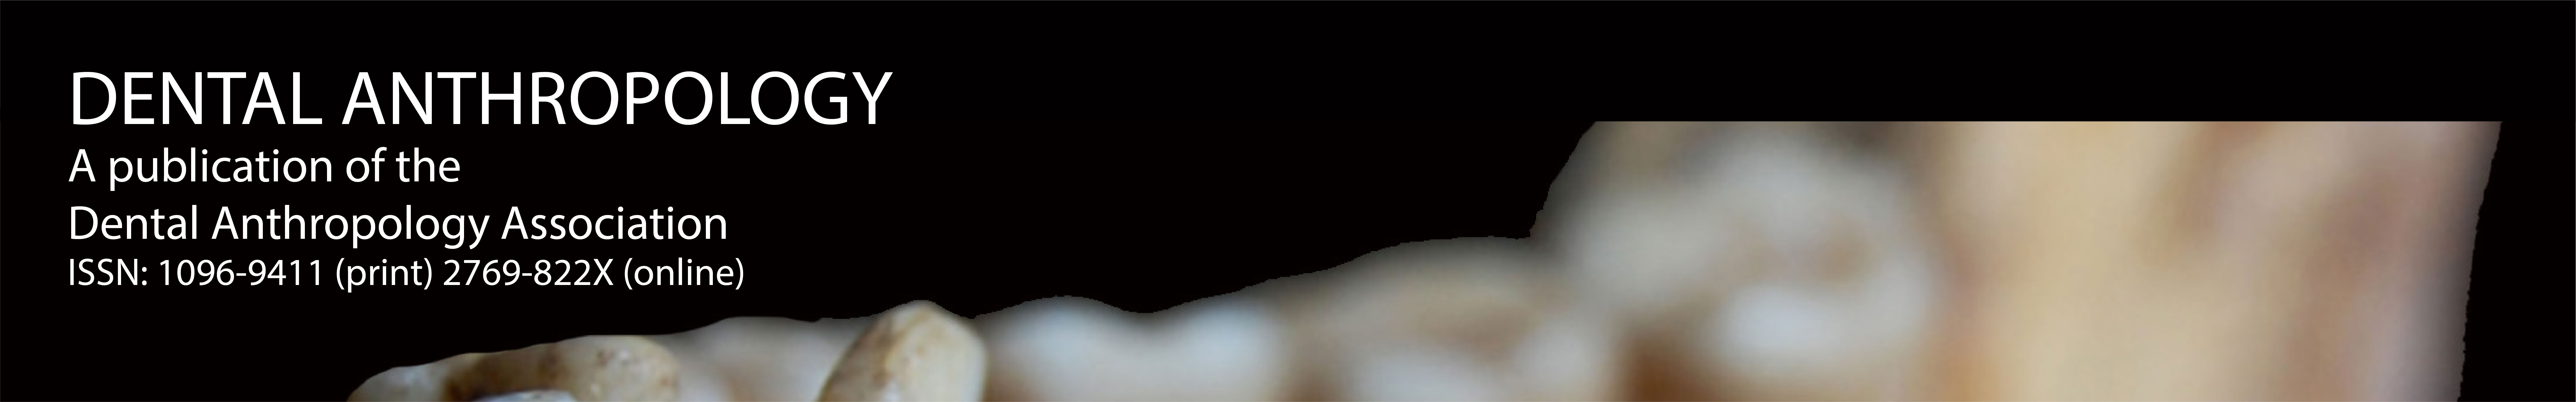 blurred image of mandible